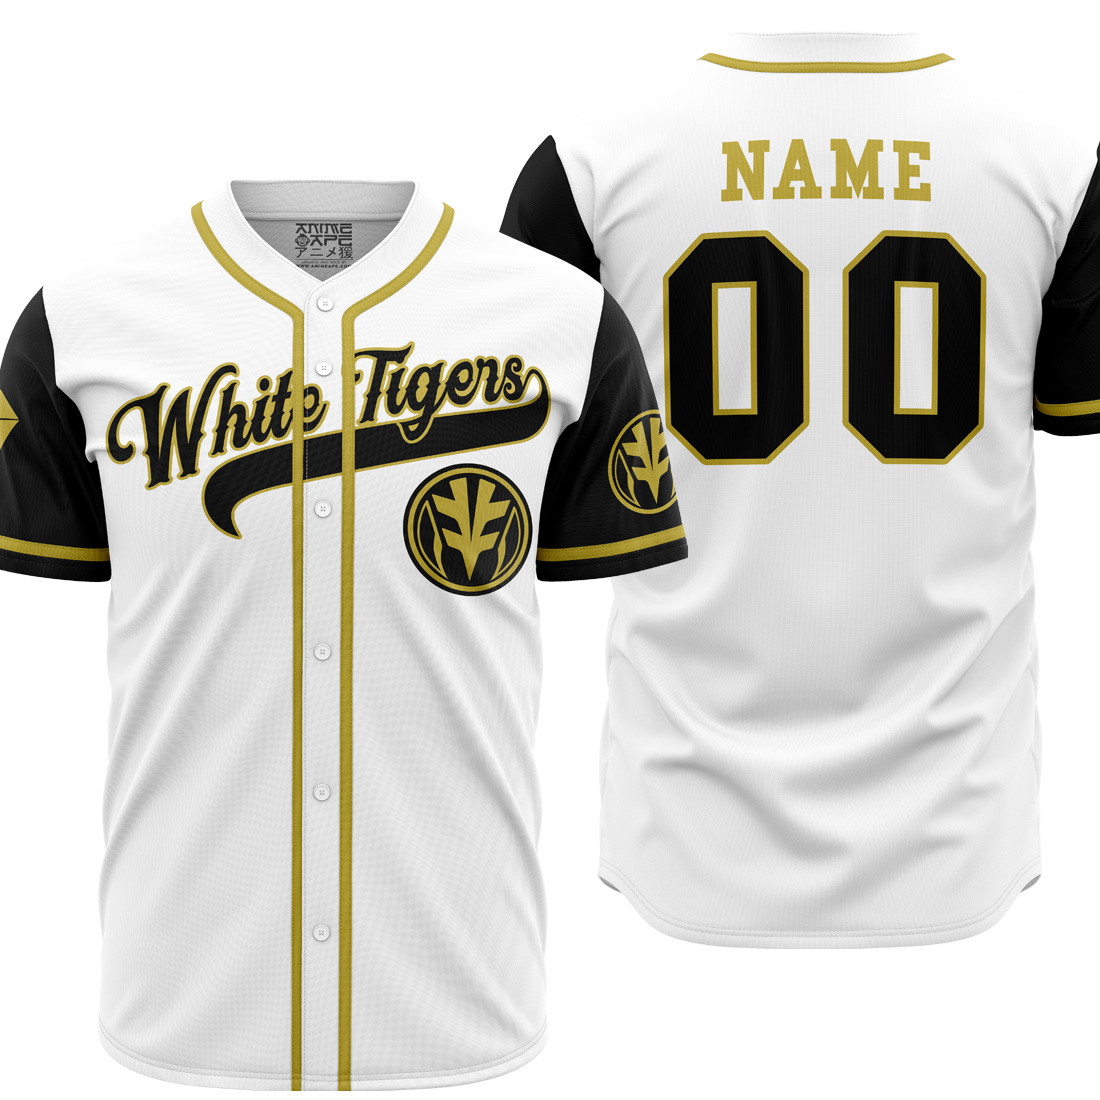 Personalized White Tigers White Power Rangers Baseball Jersey